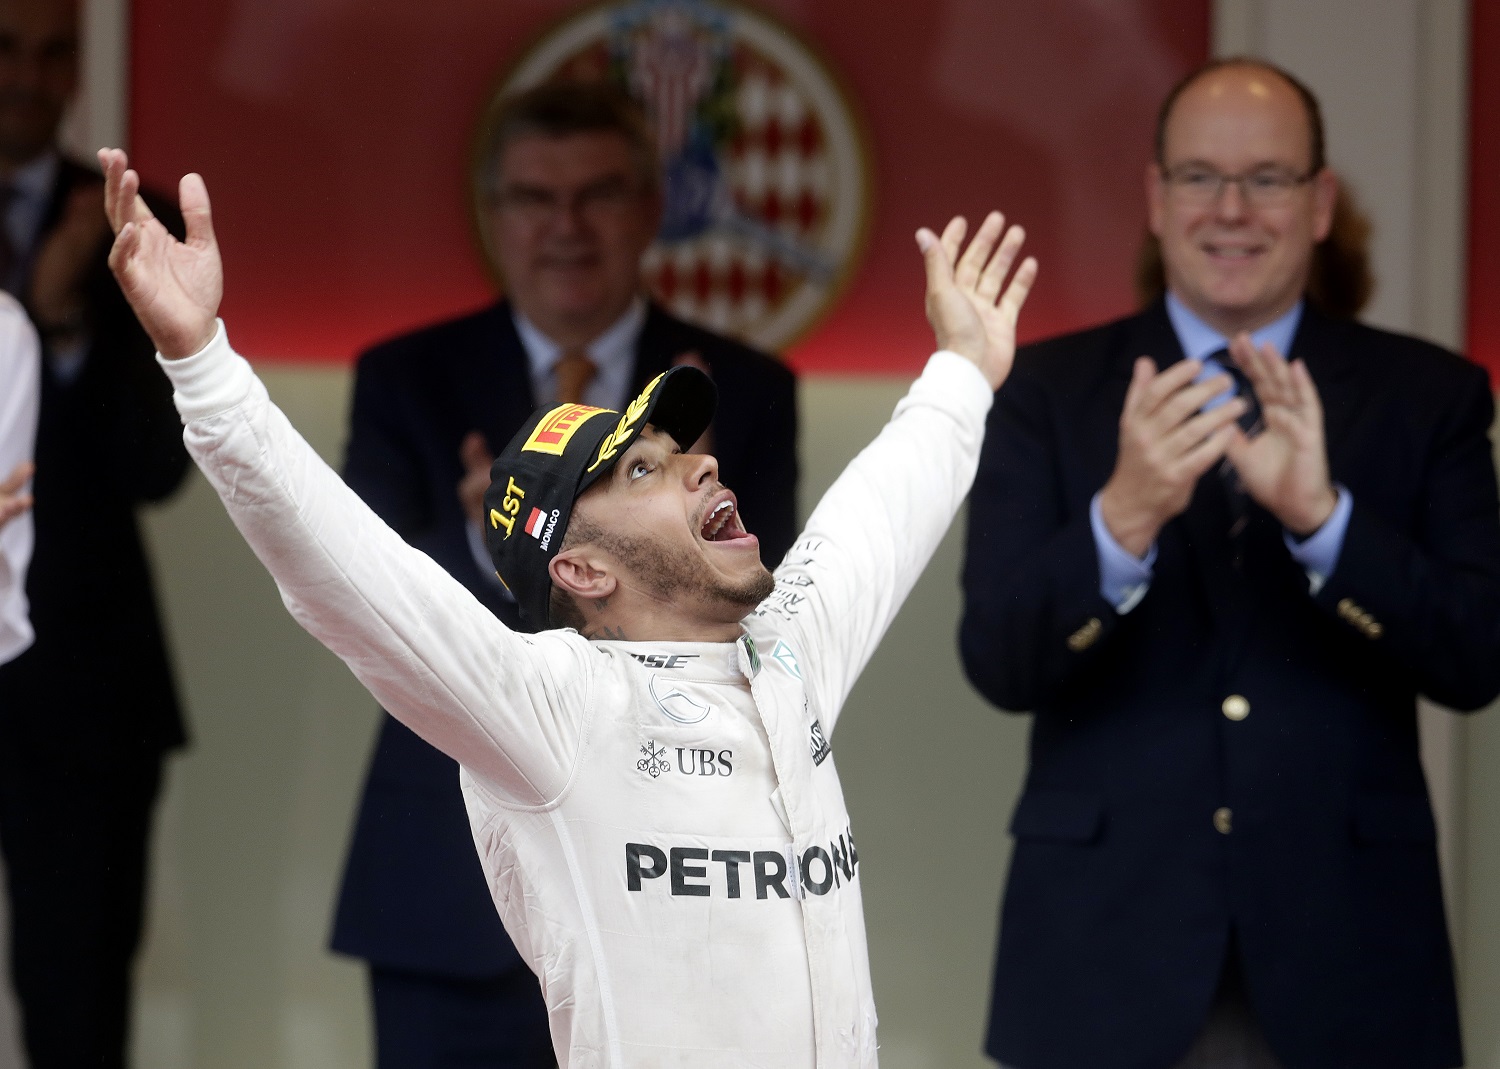 Mercedes driver Lewis Hamilton of Britain celebrates on the podium after winning the Monaco Formula One Grand Prix in Monaco, Sunday, May 29, 2016. (AP Photo/Petr David Josek)